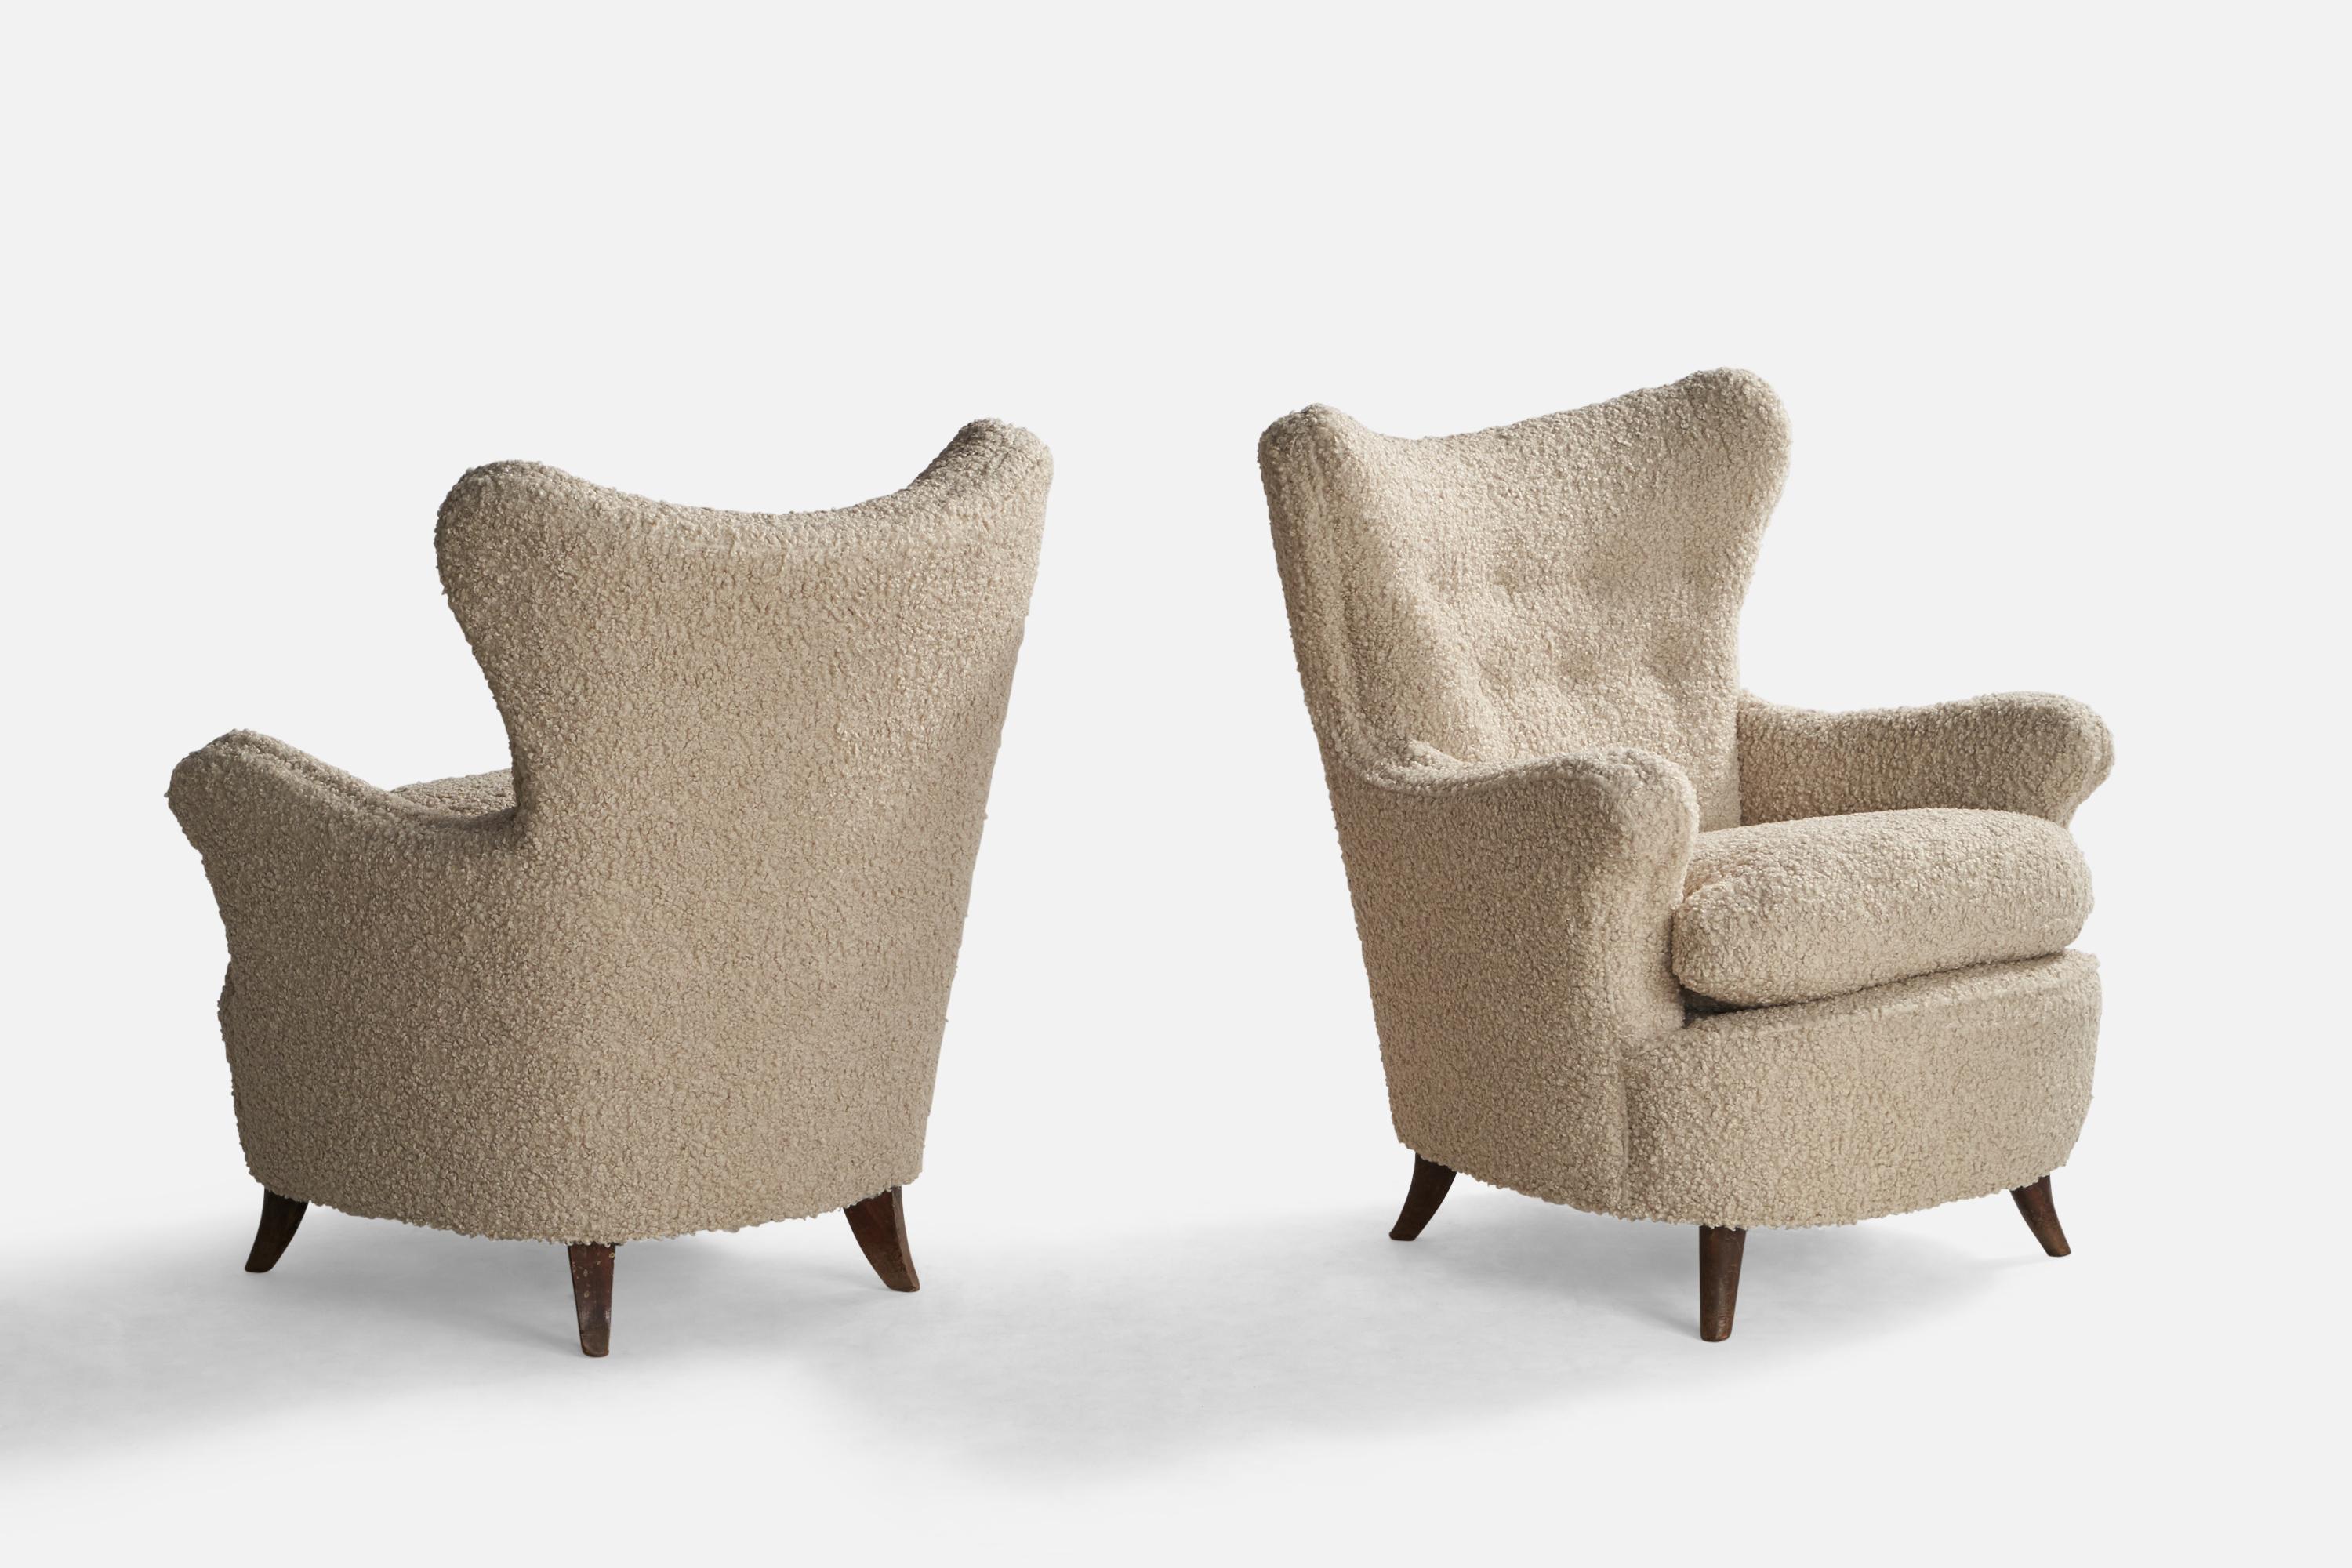 Italian Osvaldo Borsani, Lounge Chairs, Wood, Fabric, Italy, 1940s For Sale